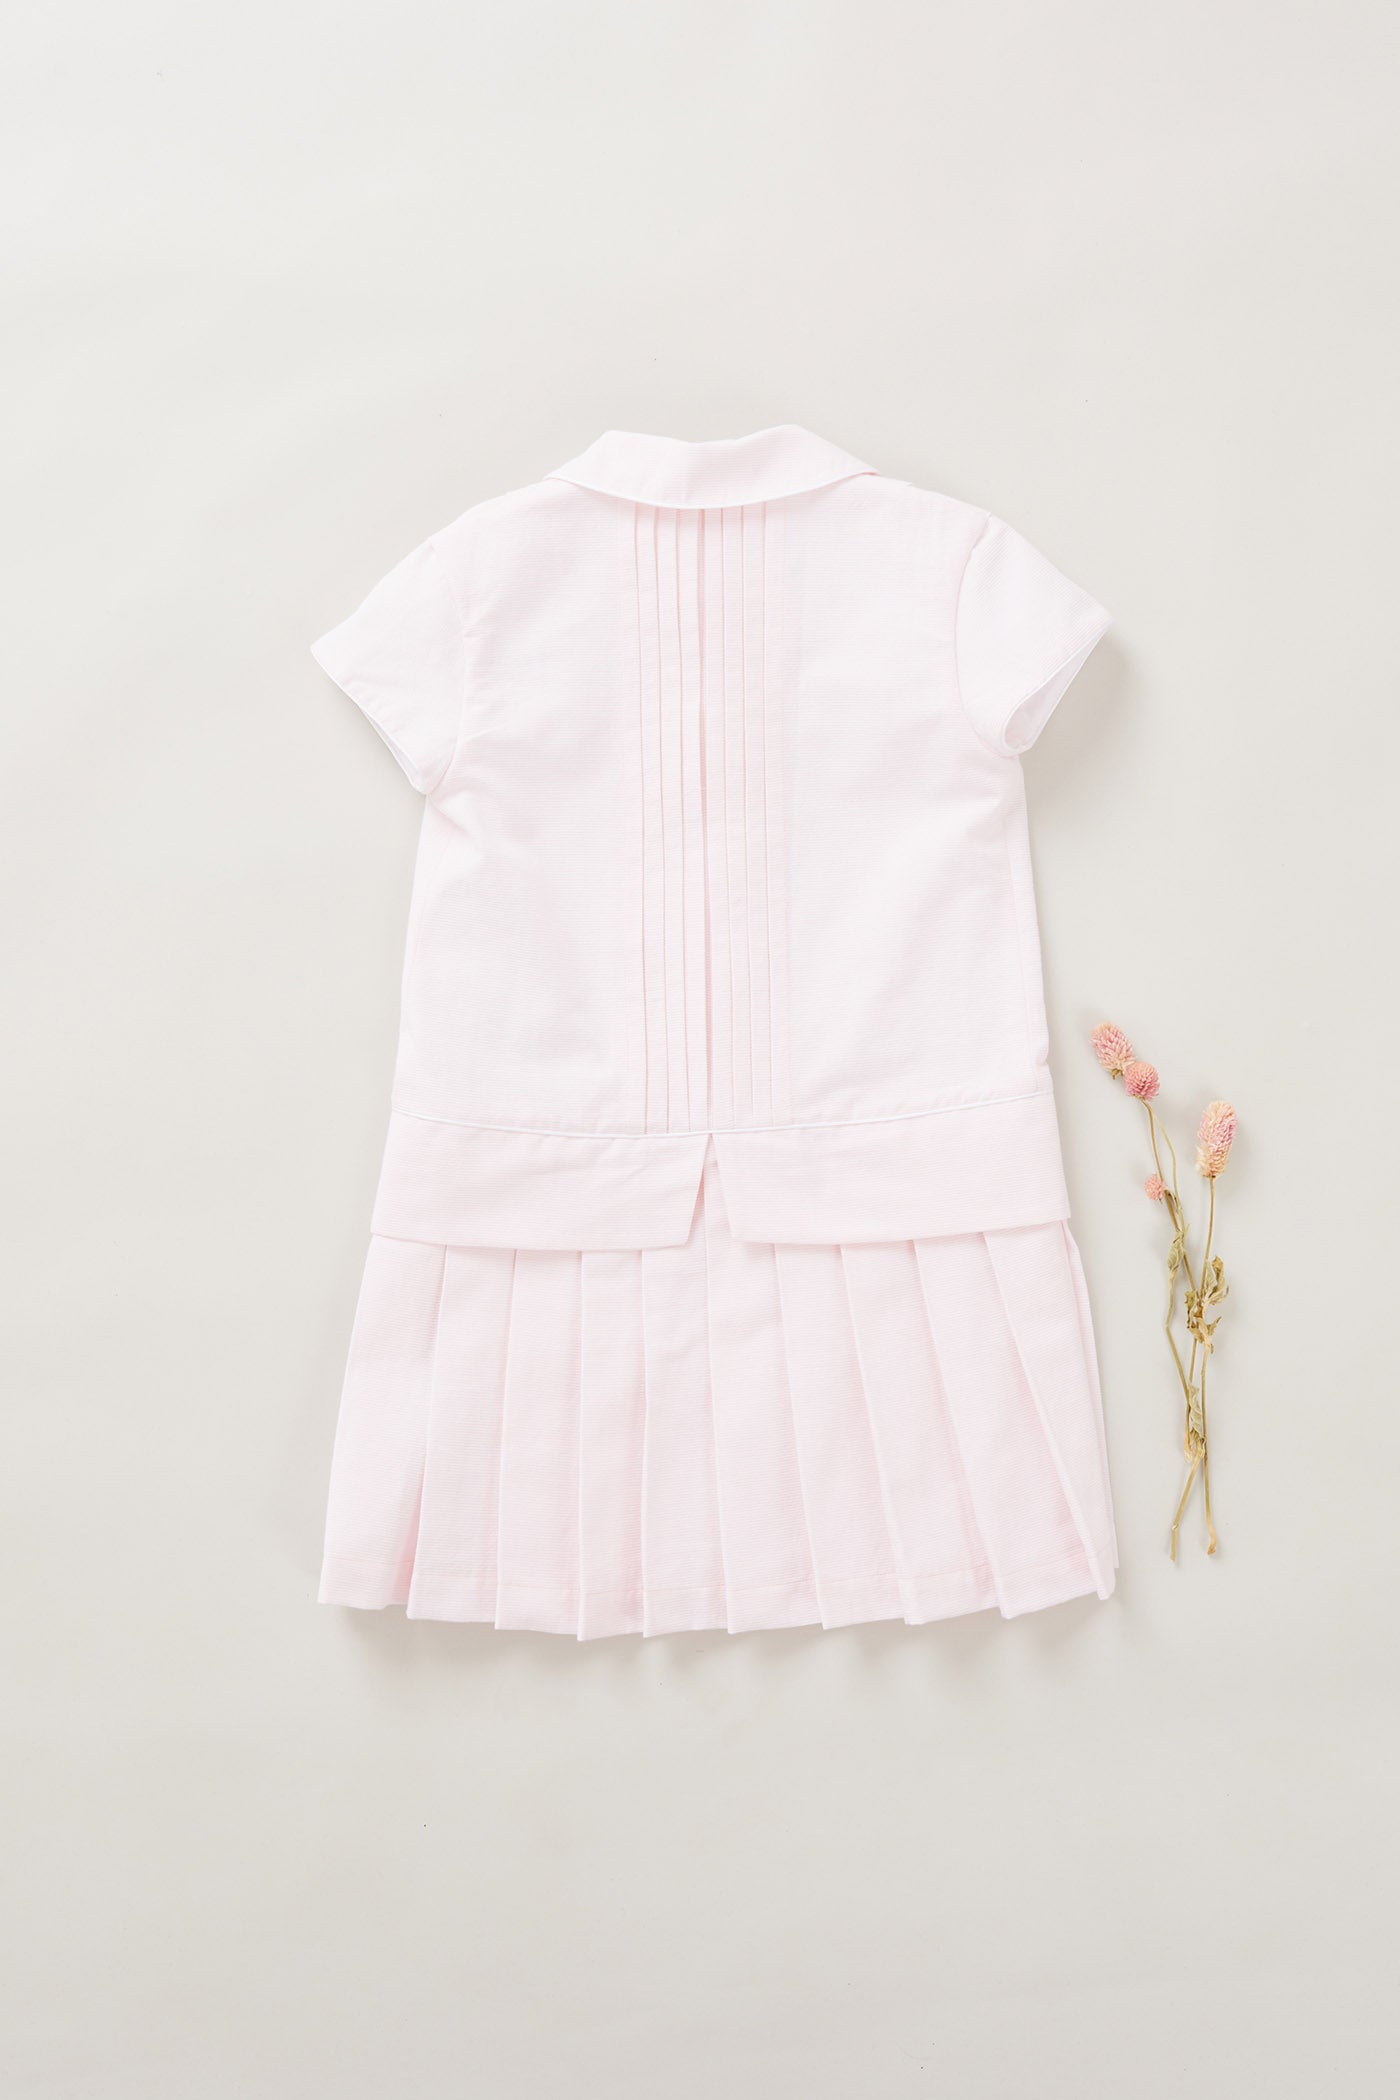 Pretzel Dress Plain Pink